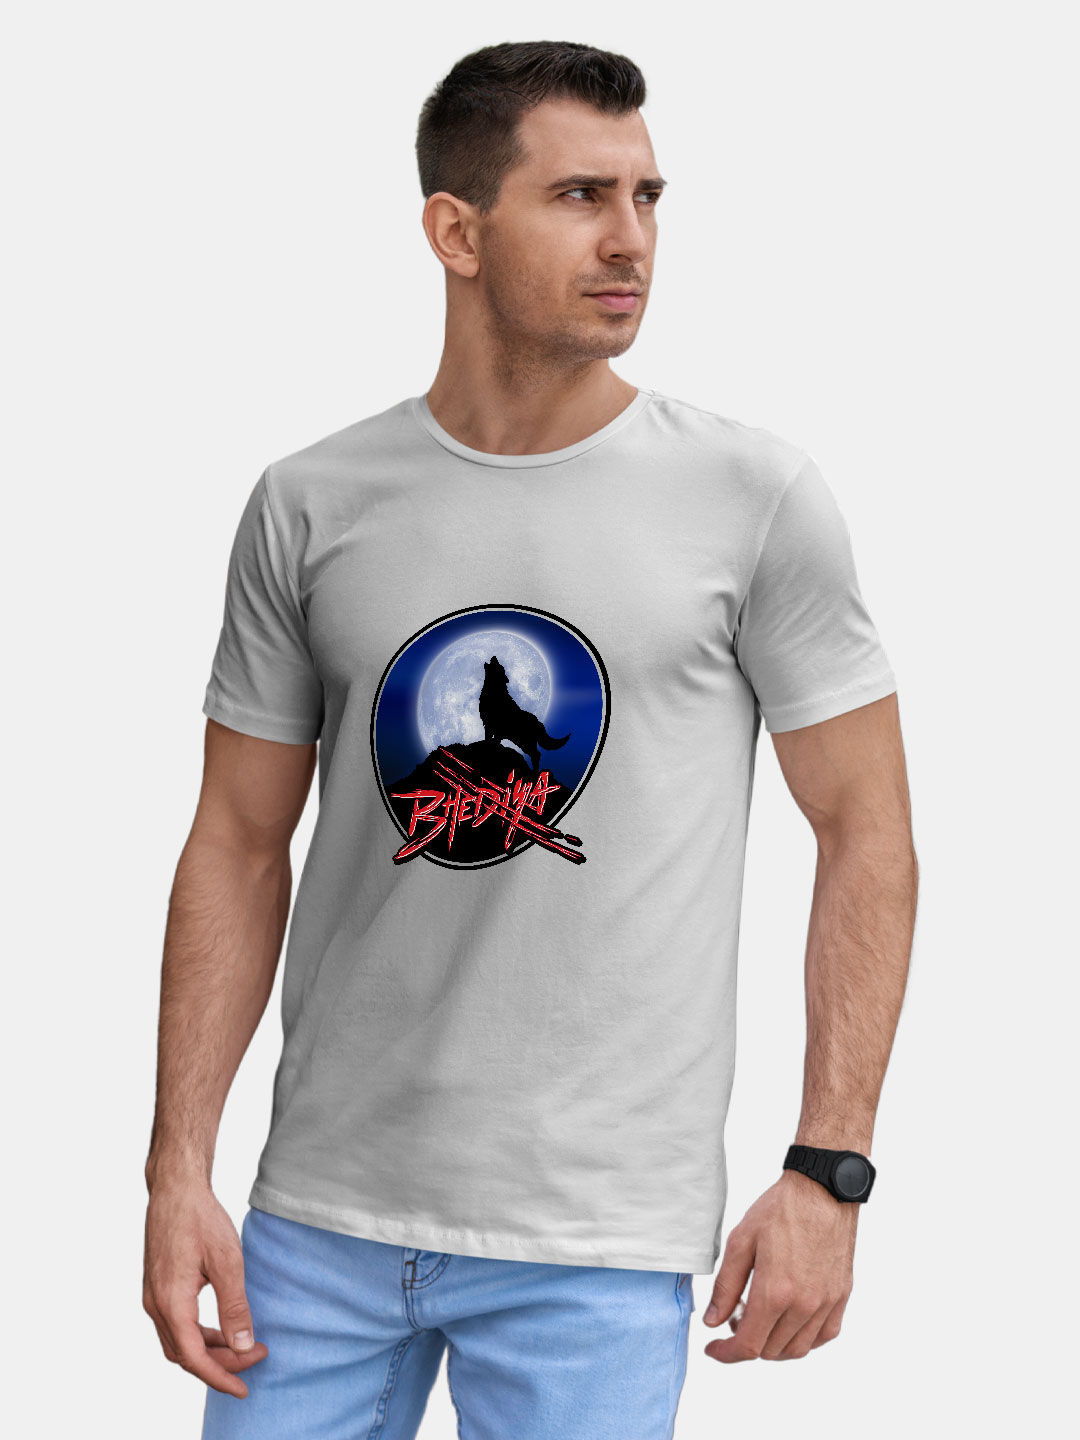 Buy Bhediya Growl White - Male Designer T-Shirts T-Shirts Online